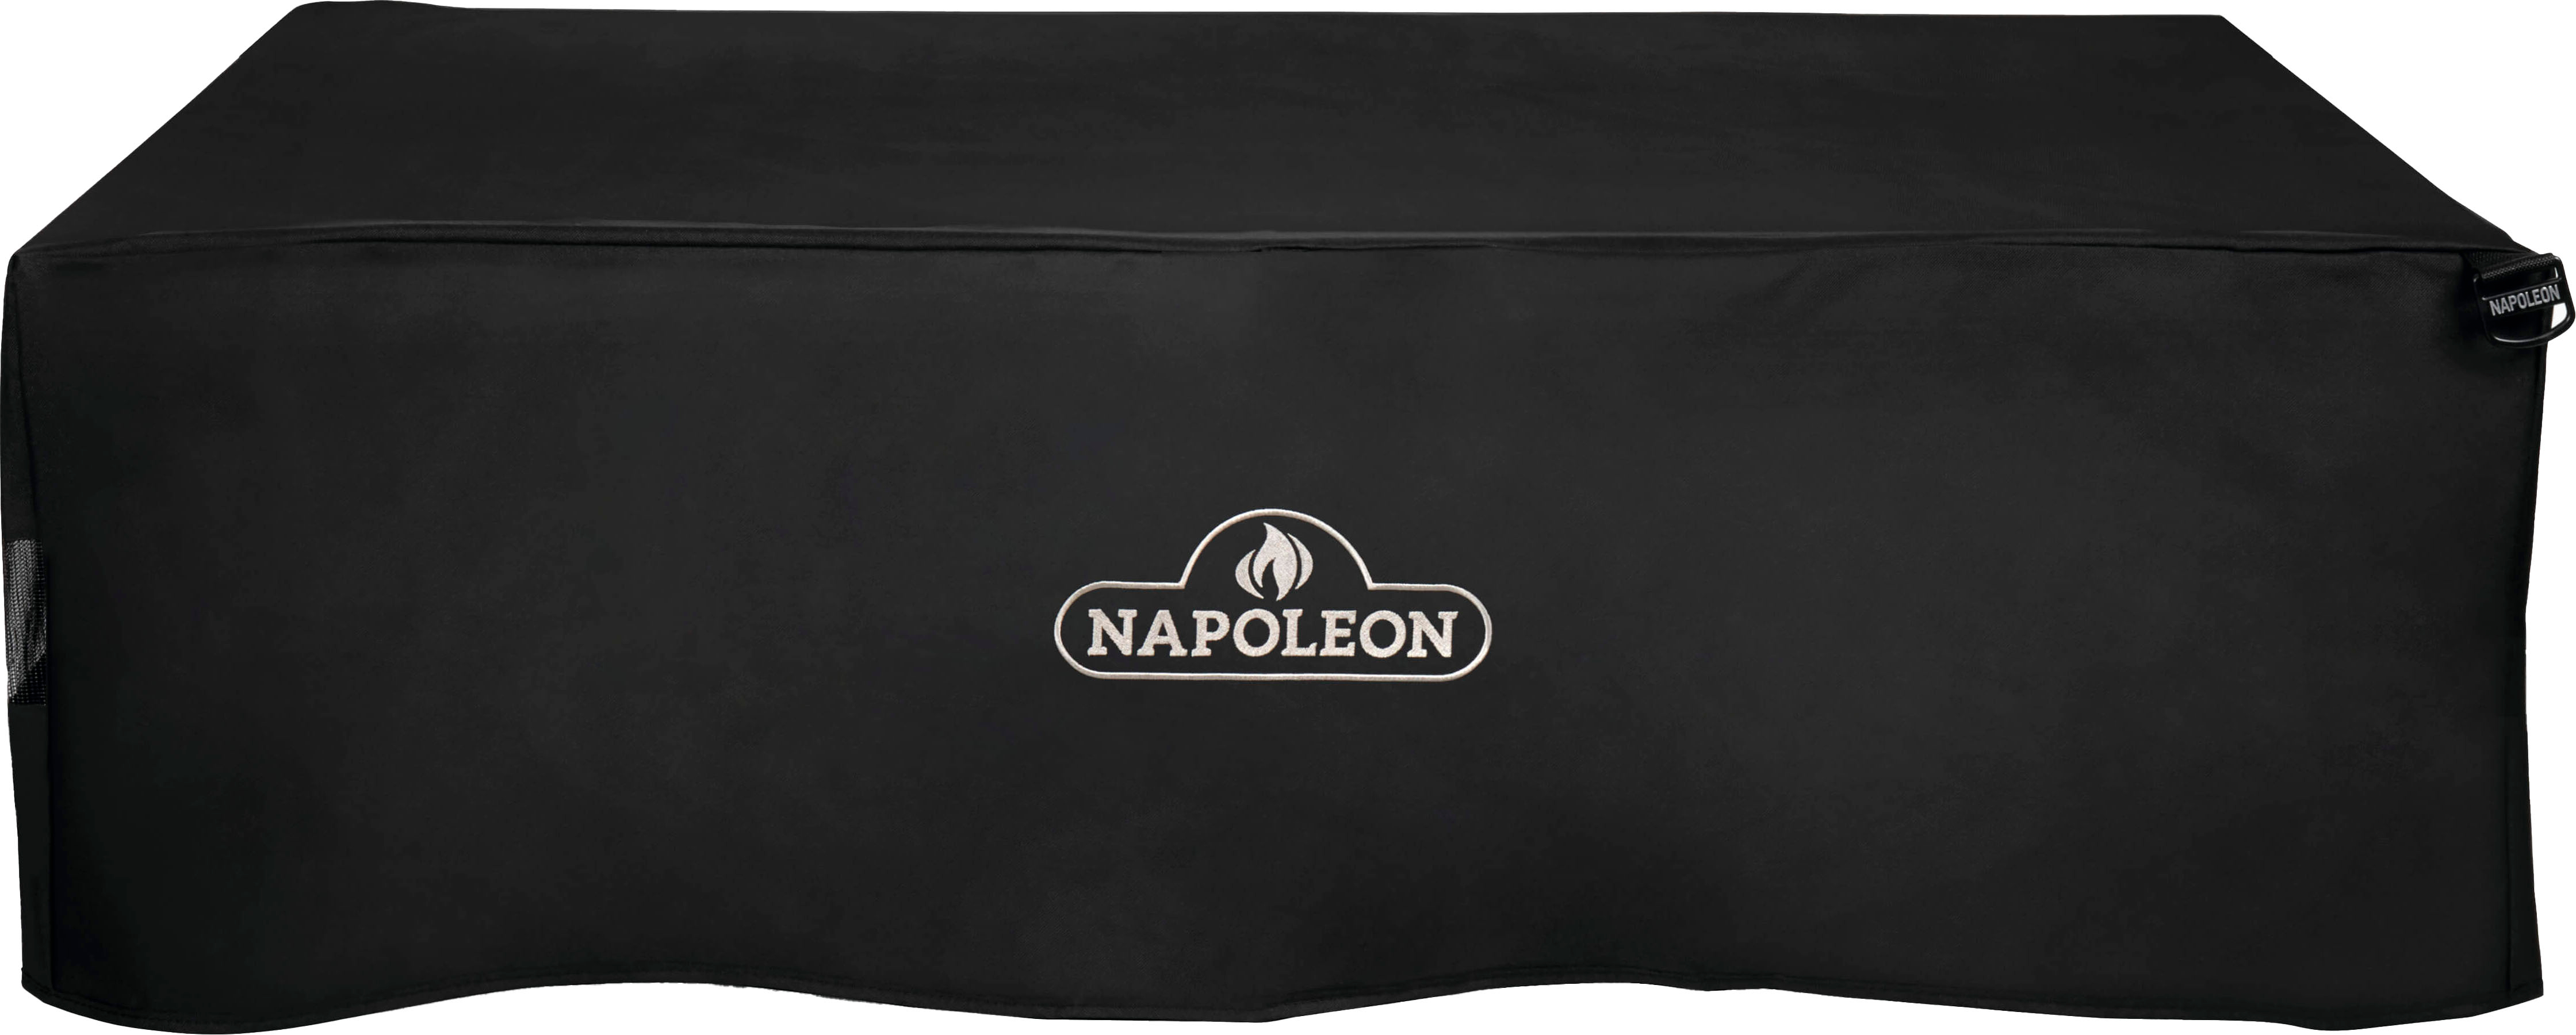 Napoleon Freestyle 425 Propane Gas Grill with Cover Graphite Gray